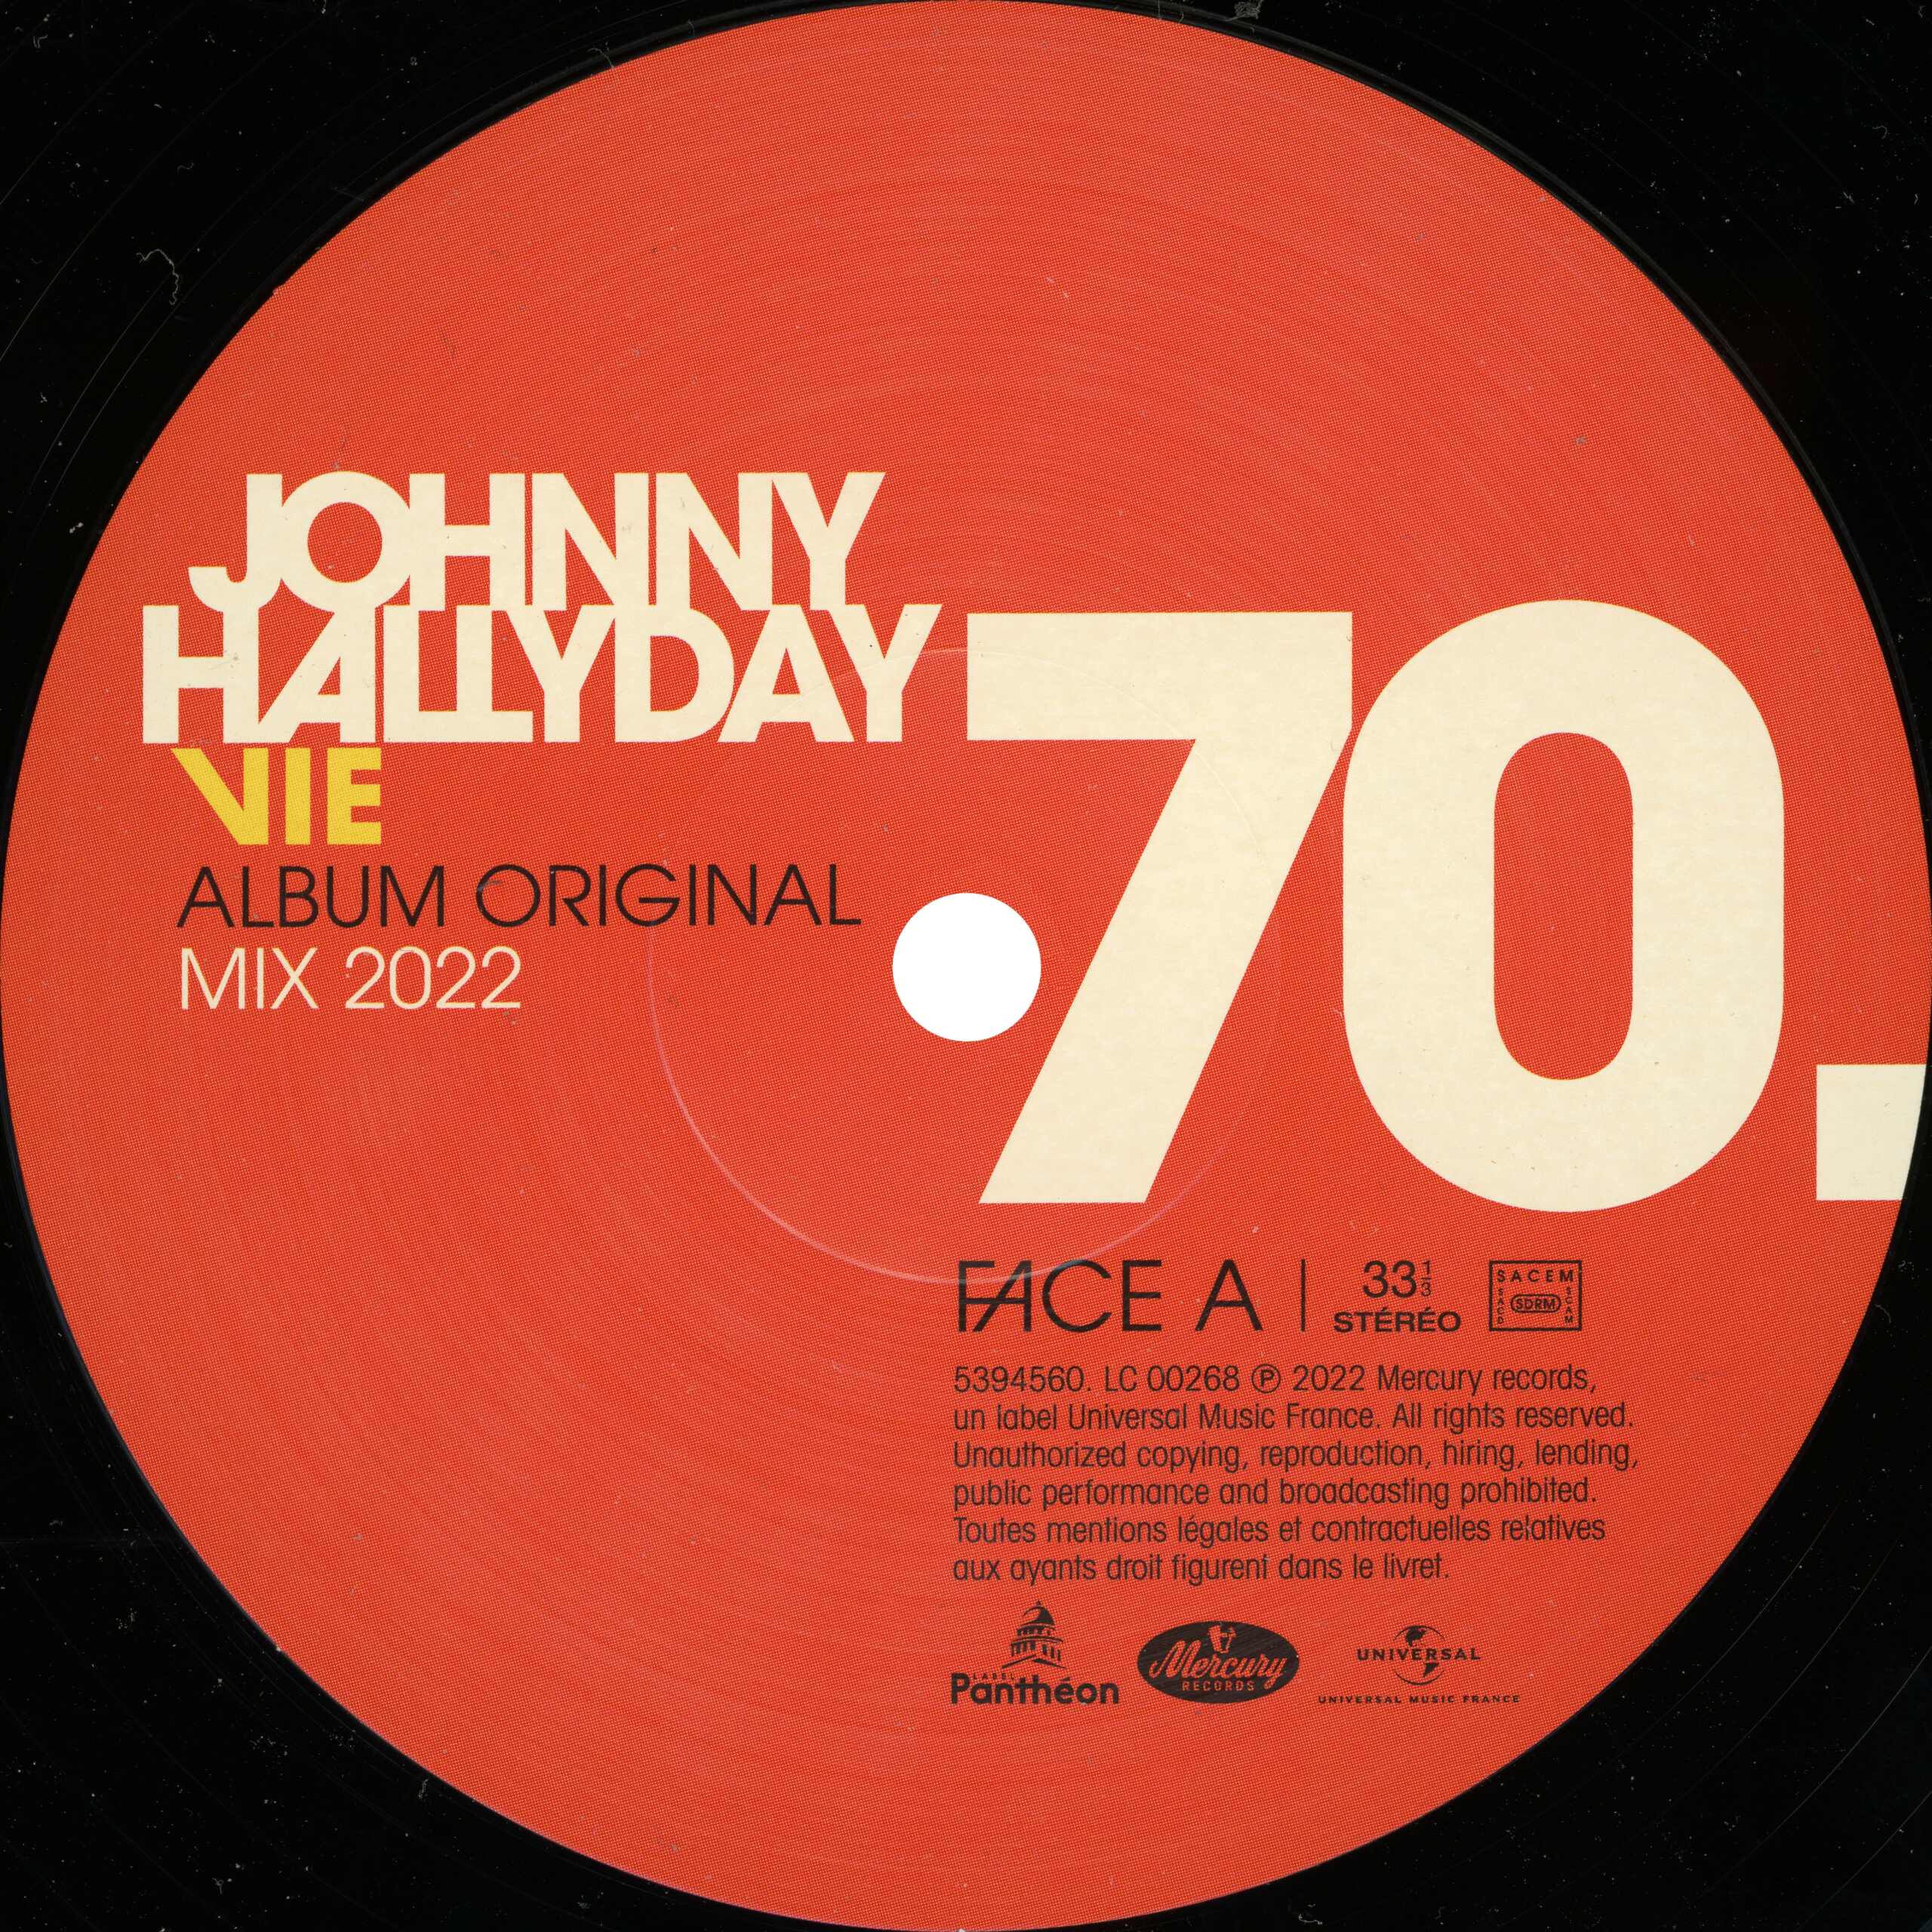 Johnny 70 Coffret collector 3 LP 4 CD 1 DVD Collec21